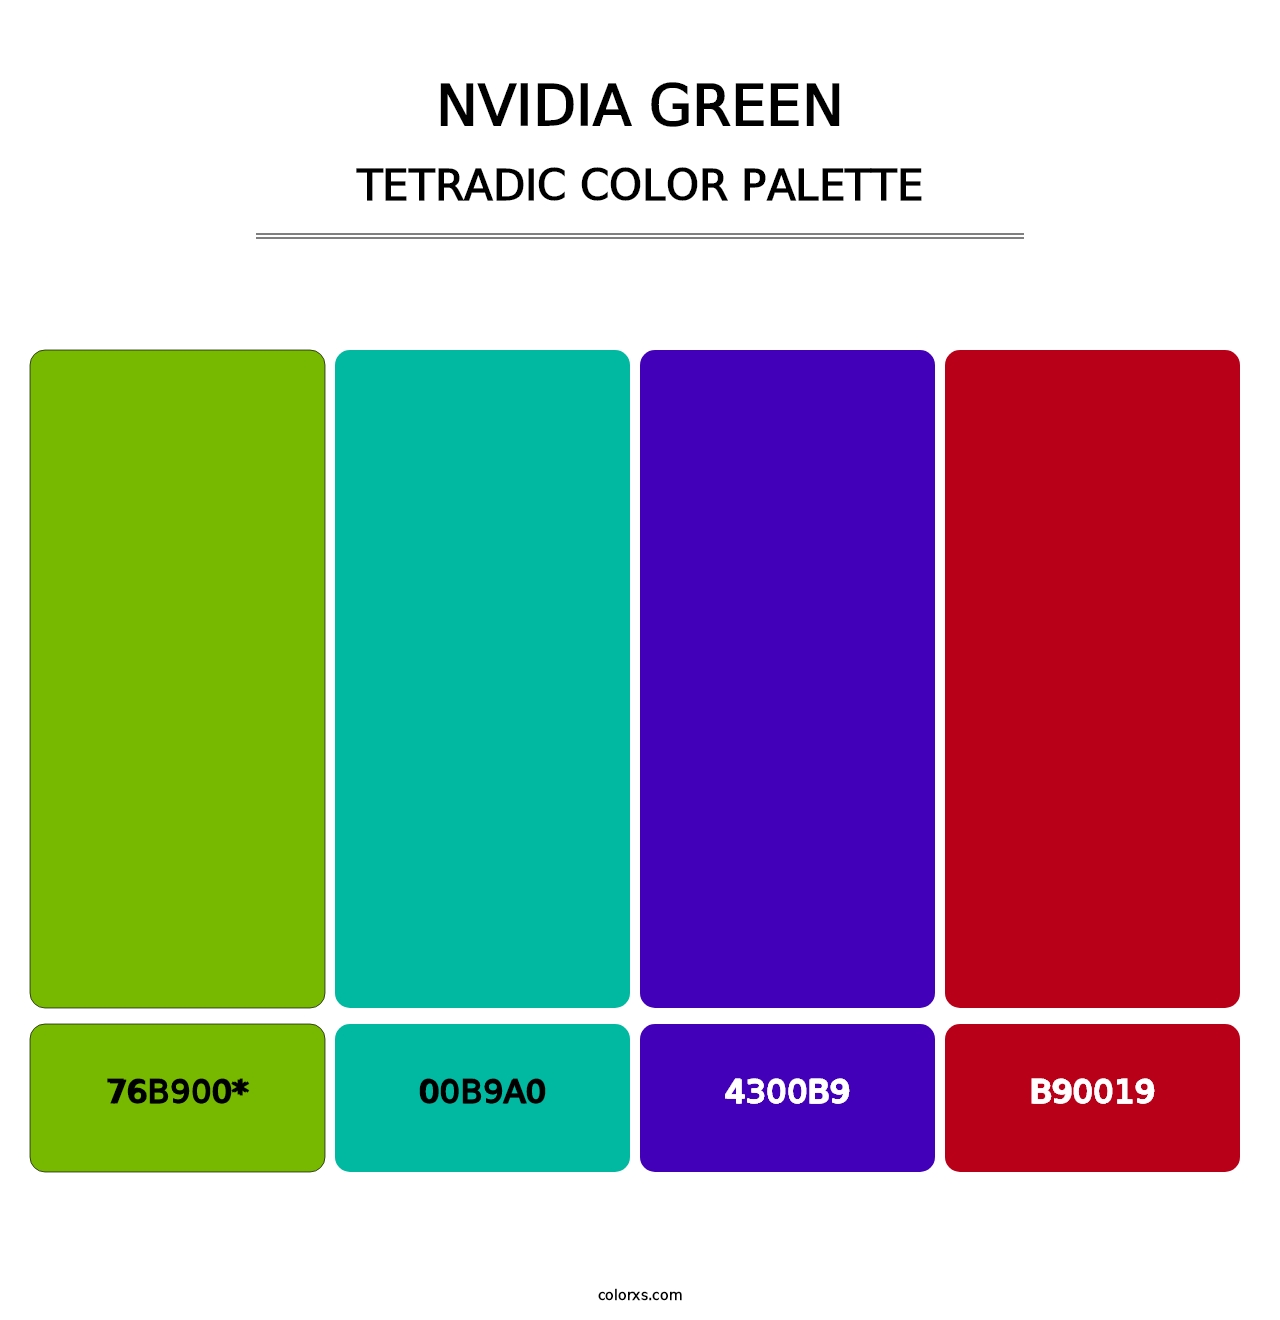 Nvidia Green - Tetradic Color Palette